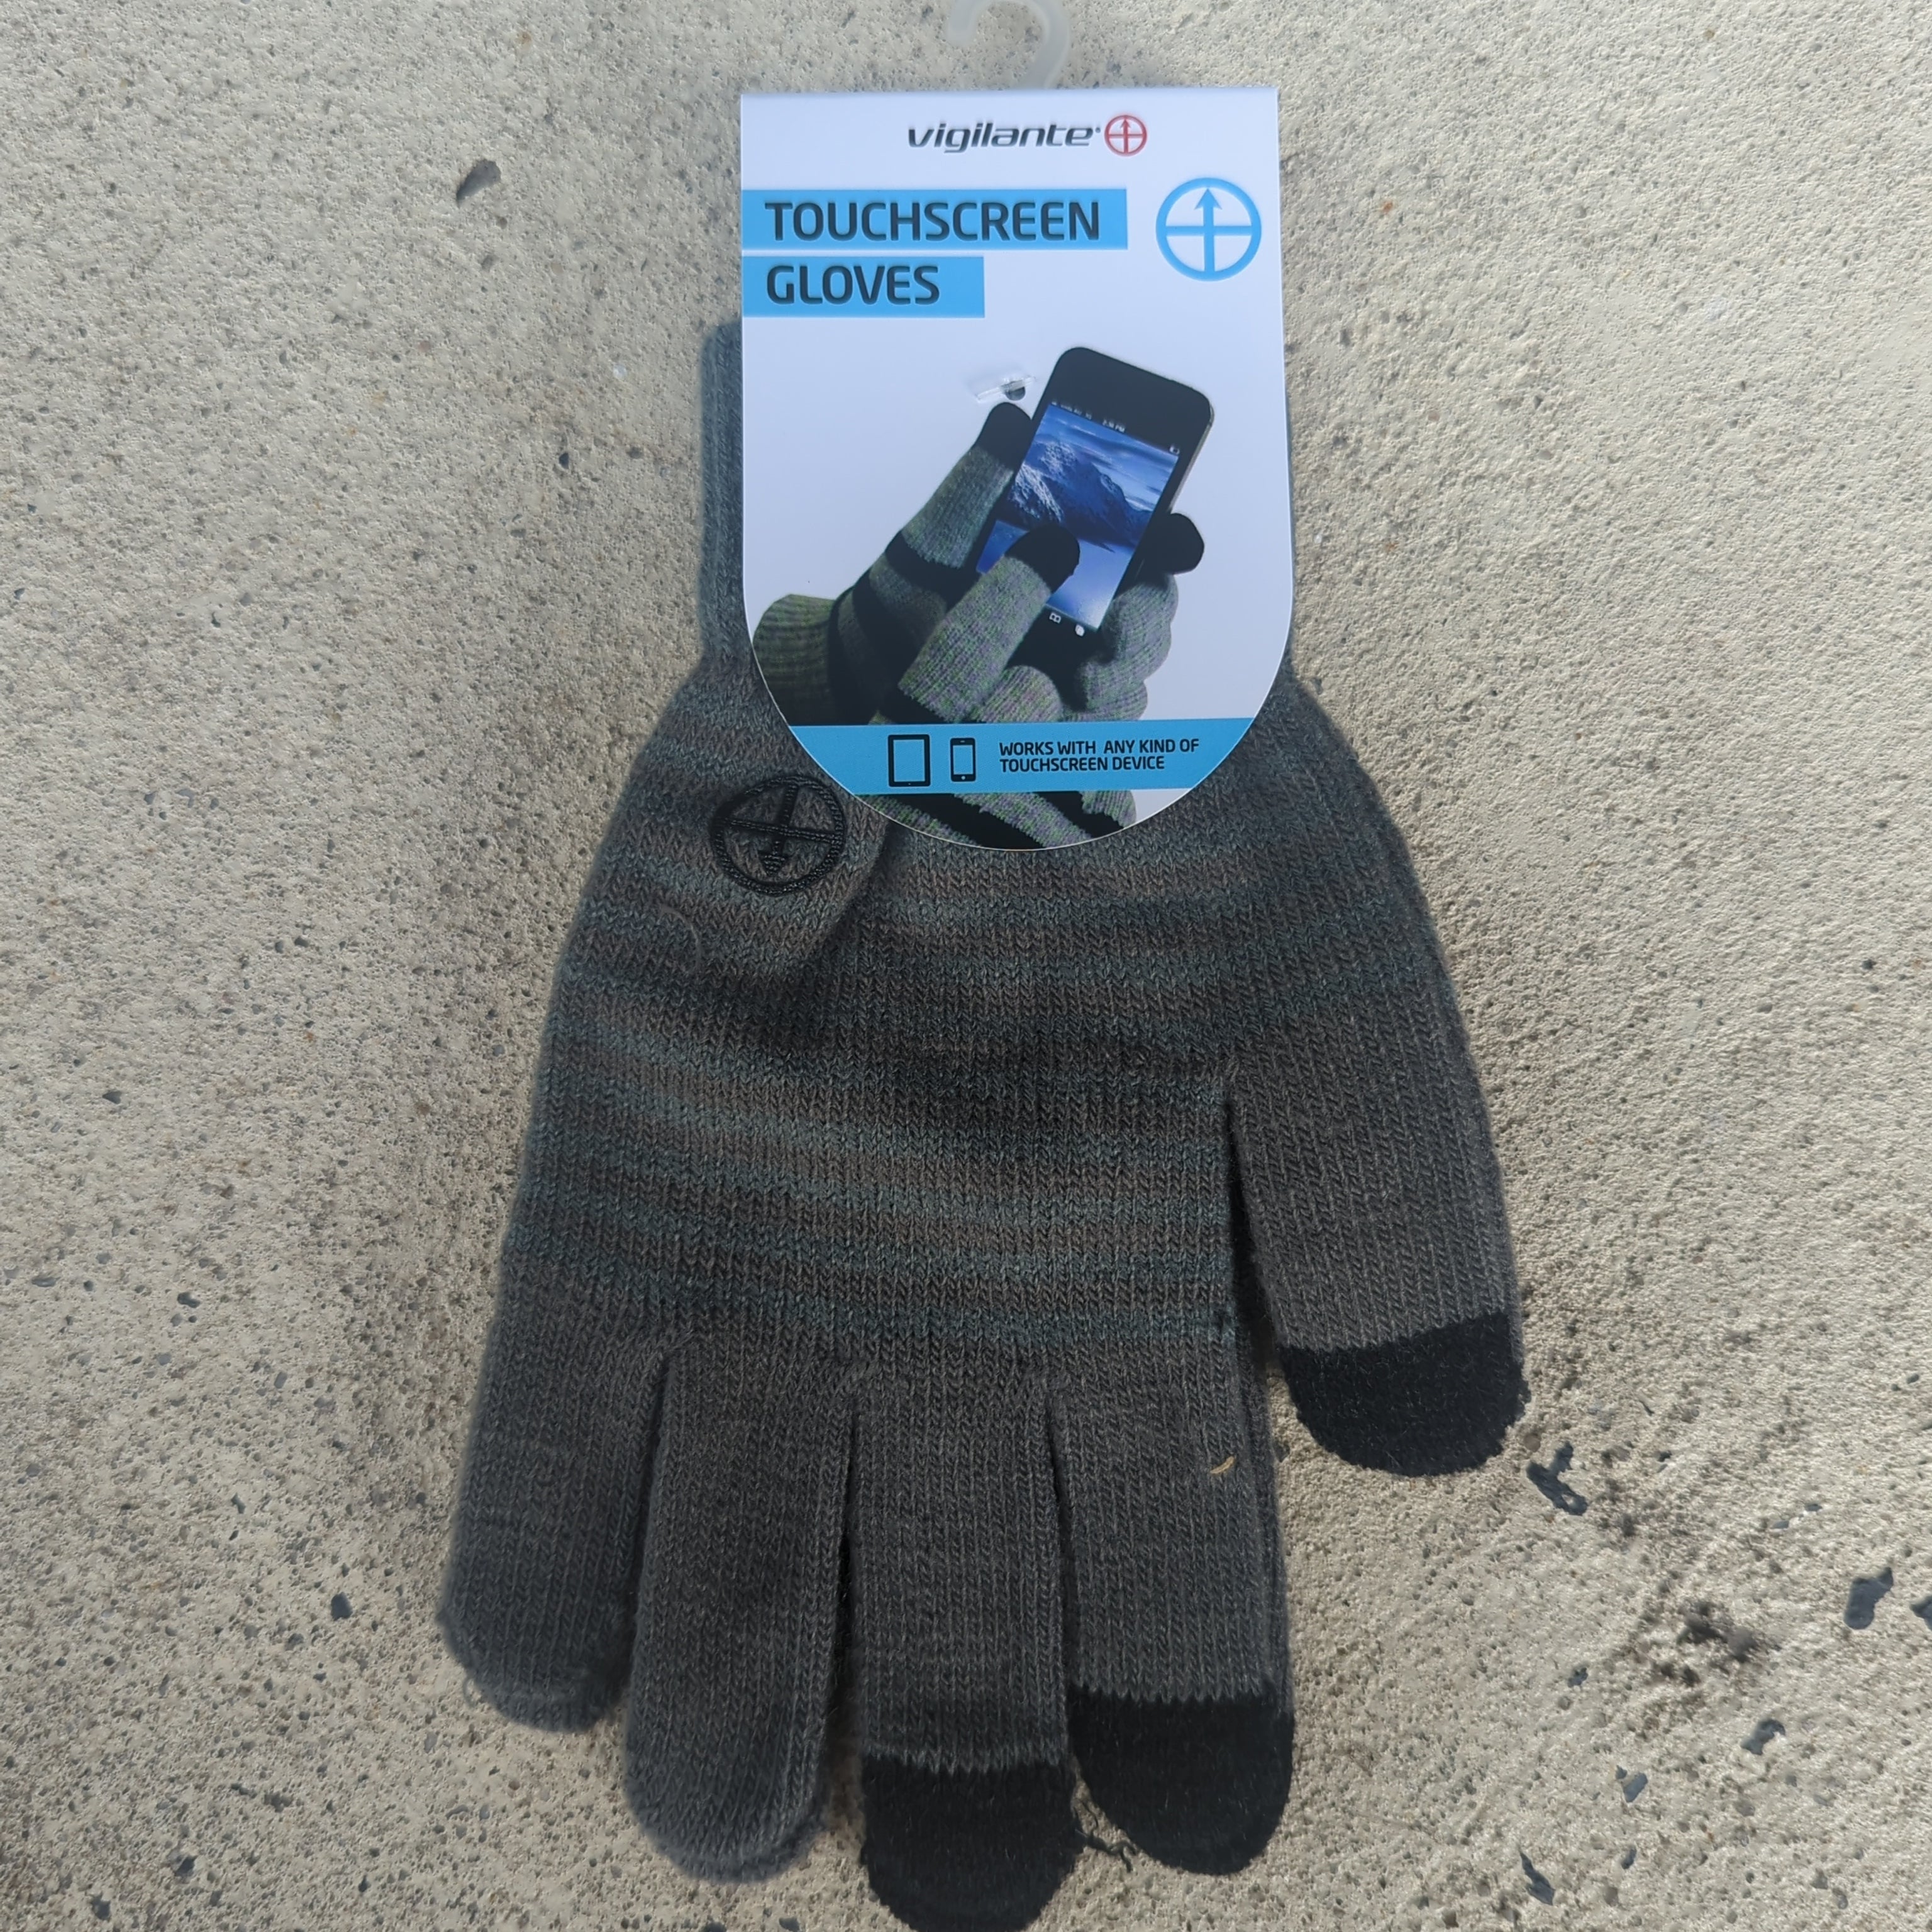 Vigilante Crossroad Stylus Touchscreen Gloves